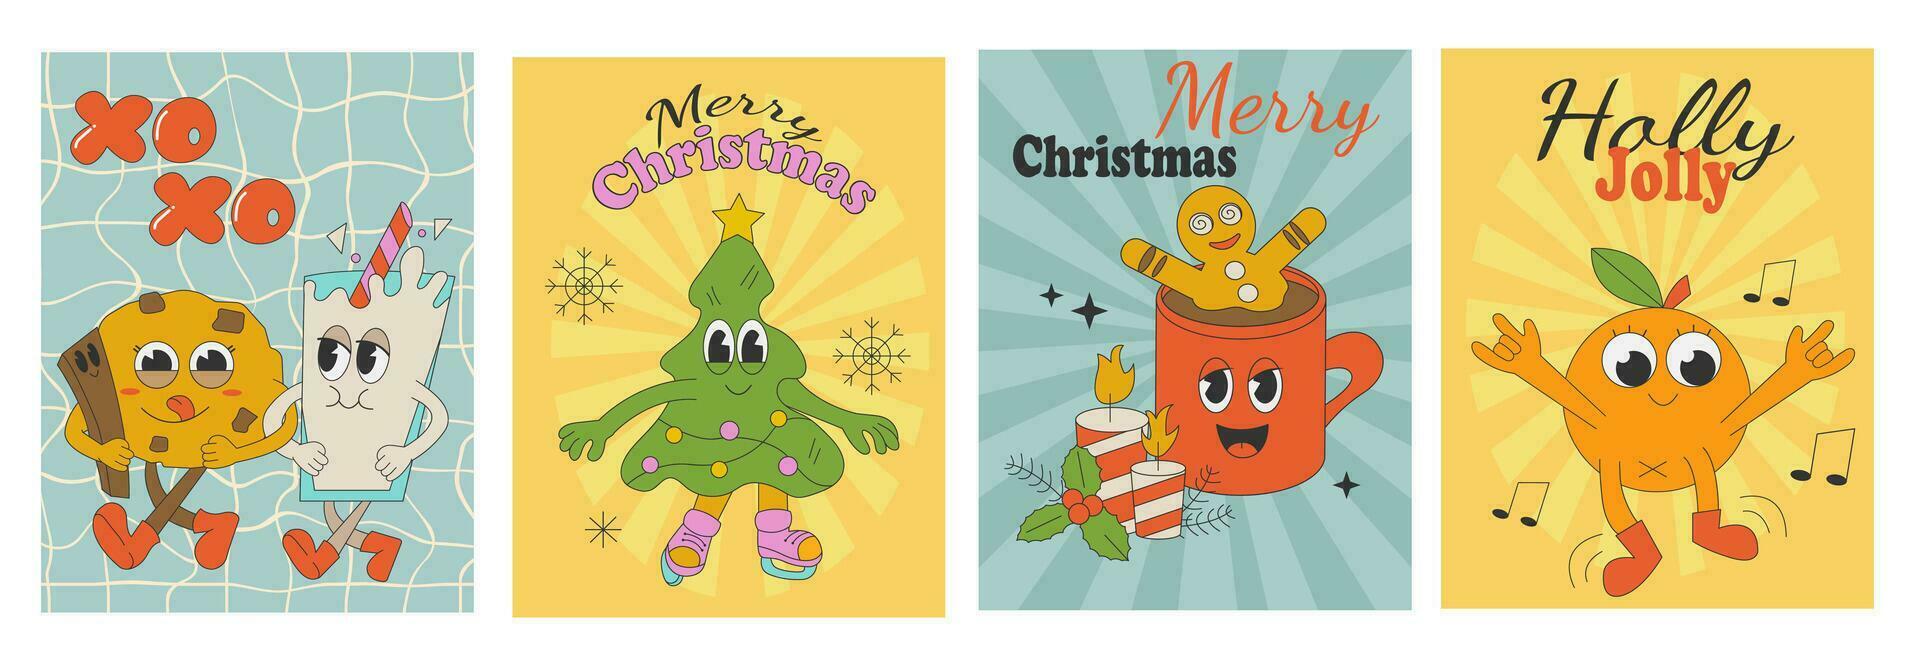 Groovy hippie Christmas. Santa Claus, tree, gift, rainbow, ho ho ho in trendy retro cartoon style. Merry Christmas and Happy New year greeting card, poster,  party invitation vector